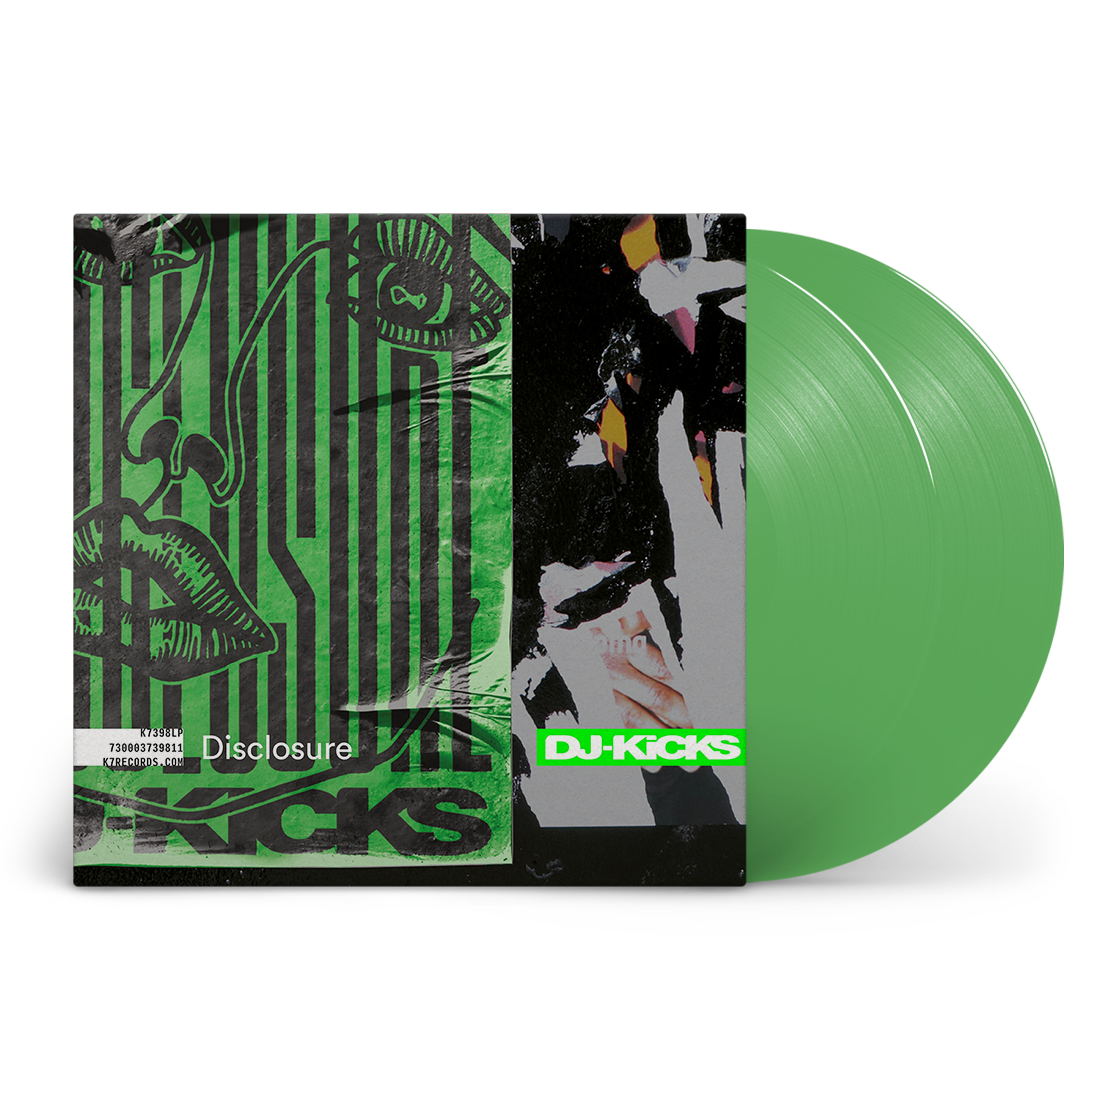 DJ-Kicks Disclosure: Limited Edition Green Vinyl 2LP